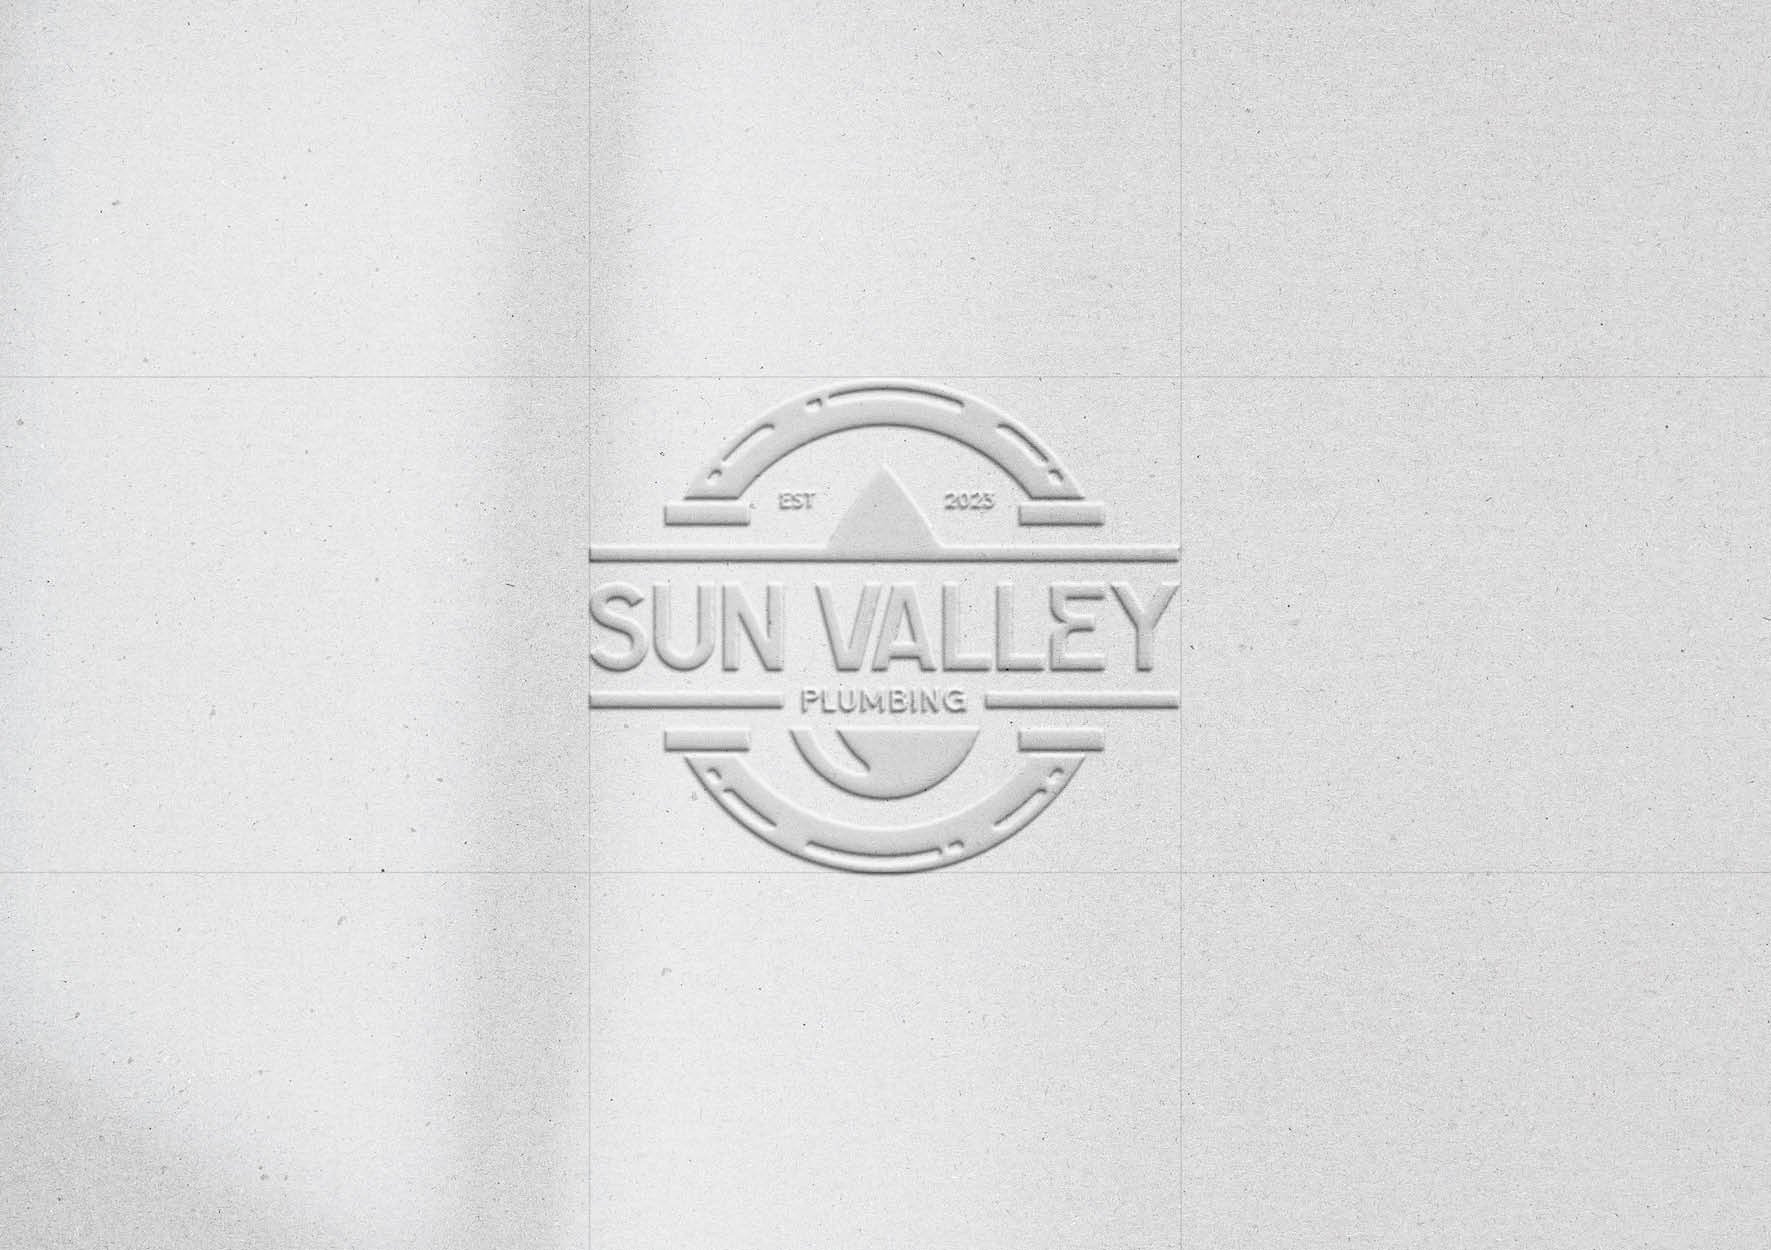 Sun Valley Plumbing - Brand Identity15.jpg